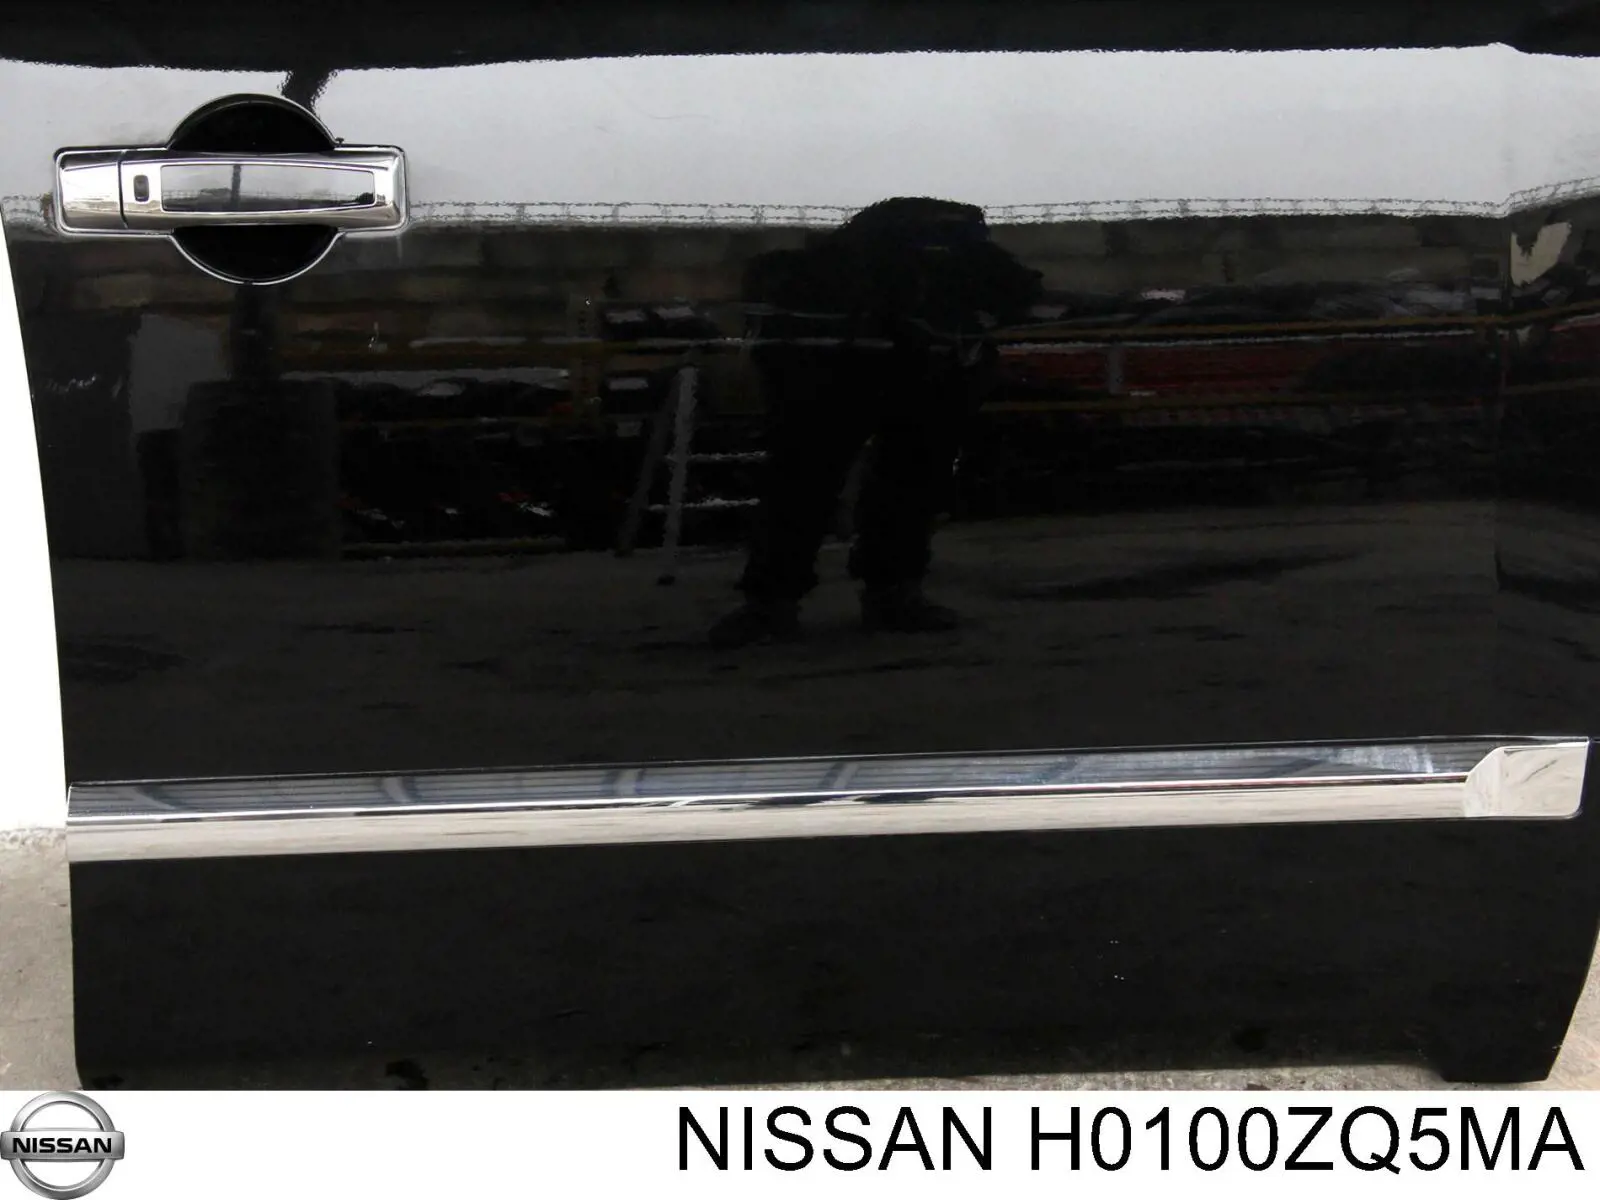 H0100ZQ5MA Nissan puerta delantera derecha